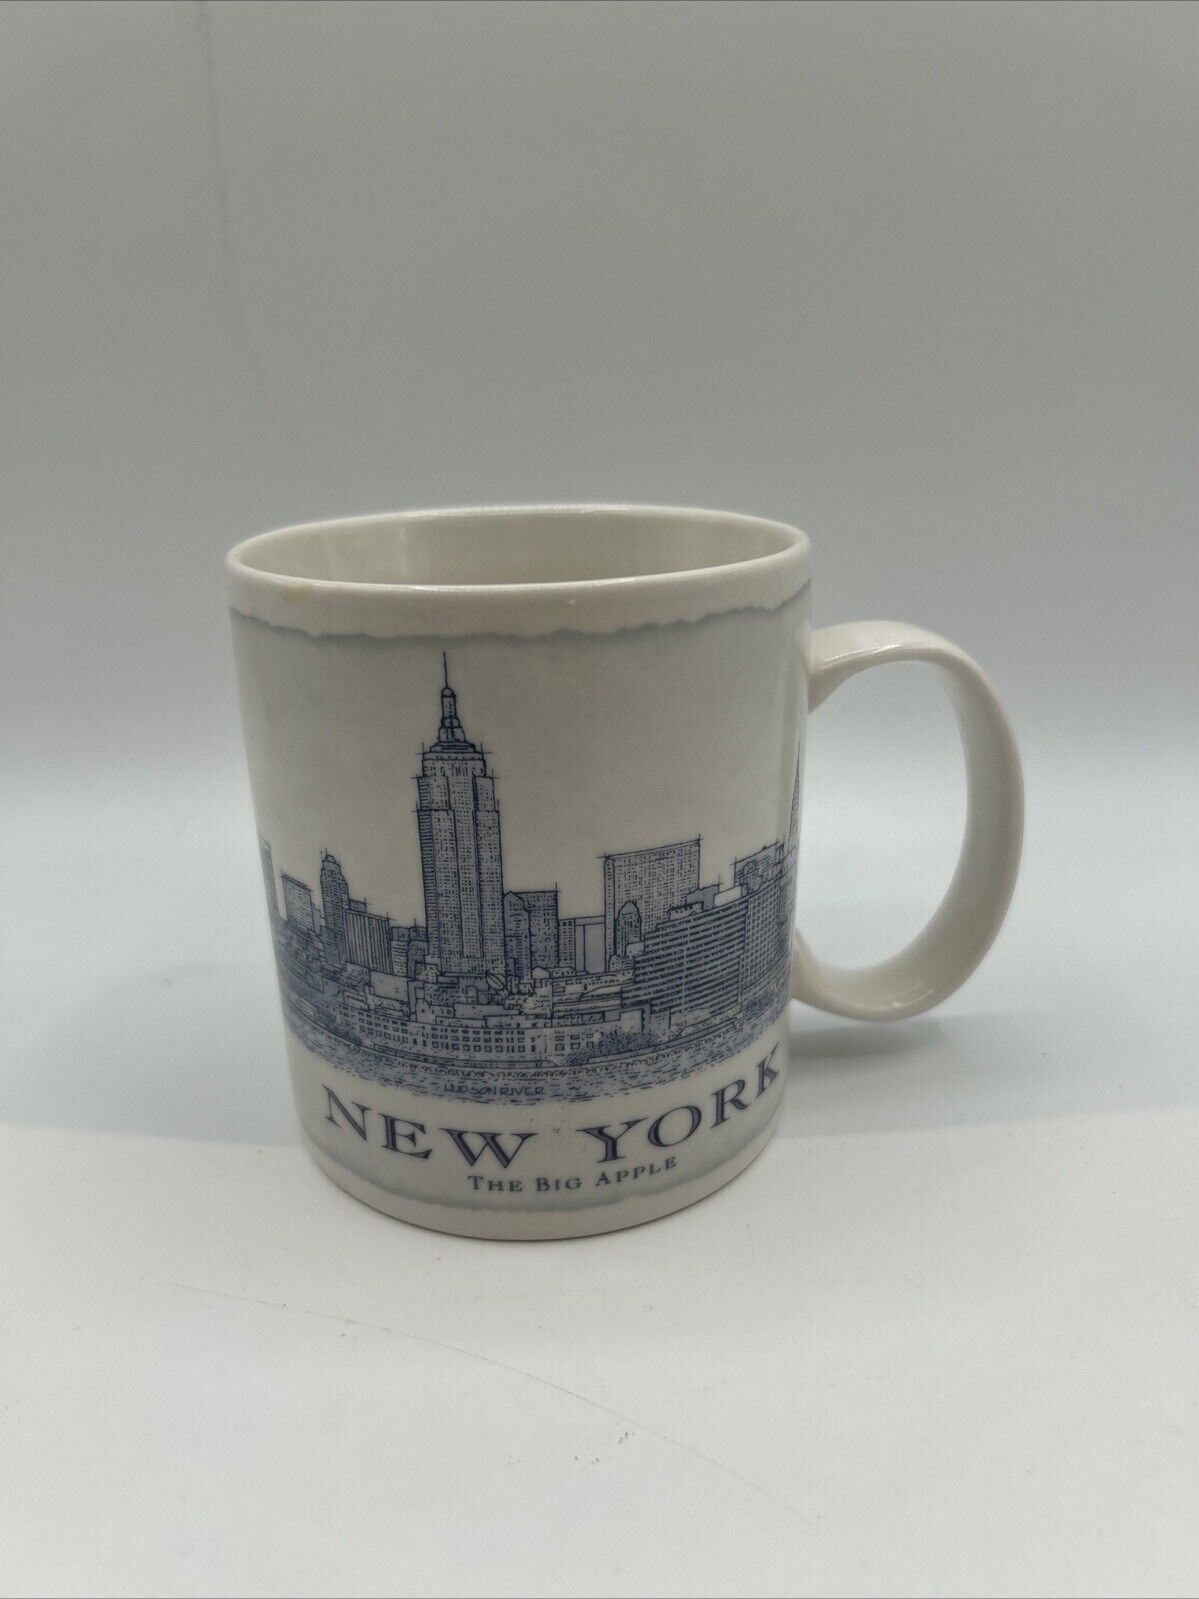 Starbucks Architect Series Coffee Mug NEW YORK “The Big Apple” 2010 - 18 oz